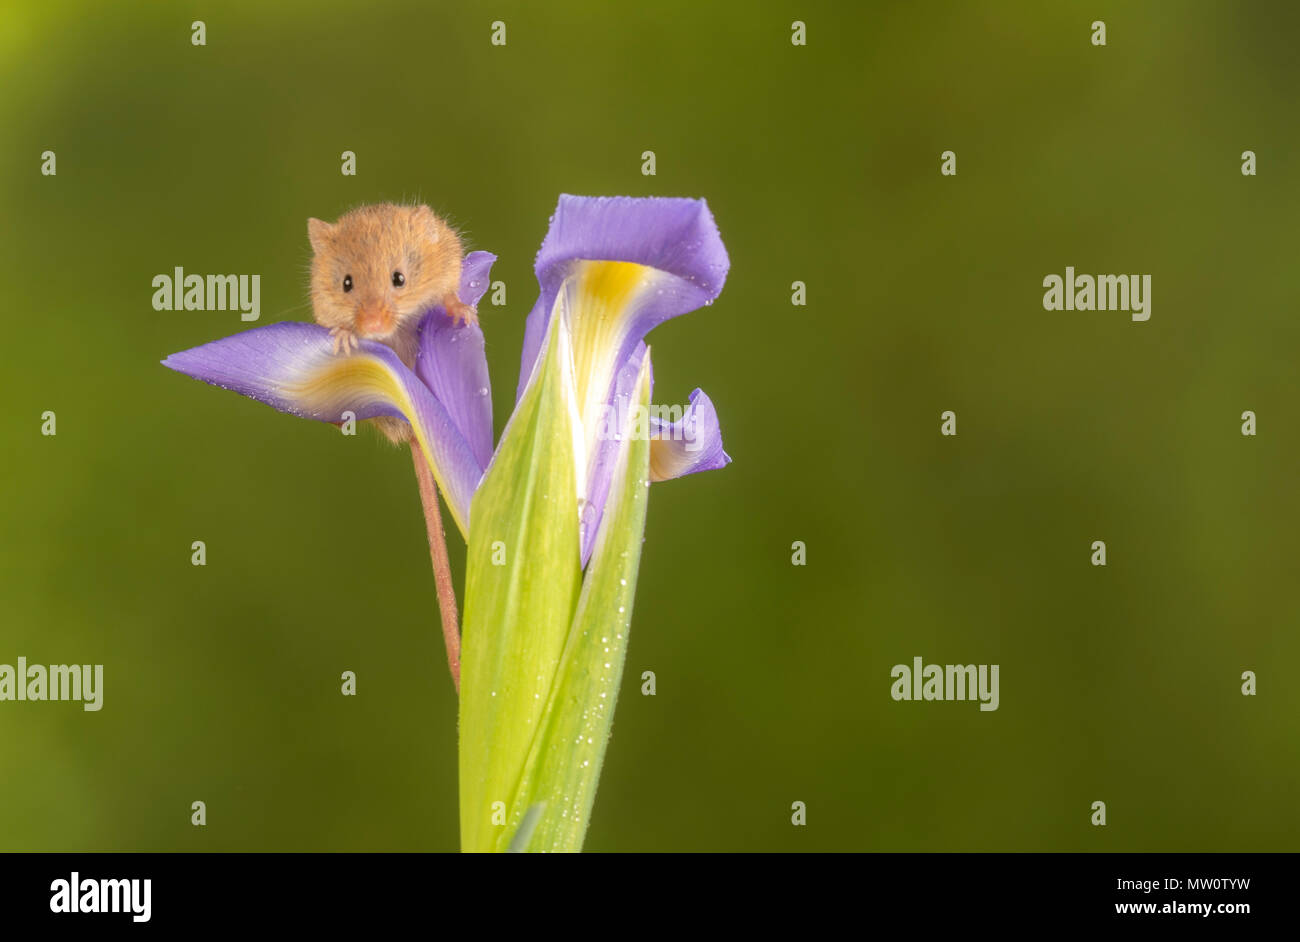 a harvest mouse climbing on a purple Iris Stock Photo